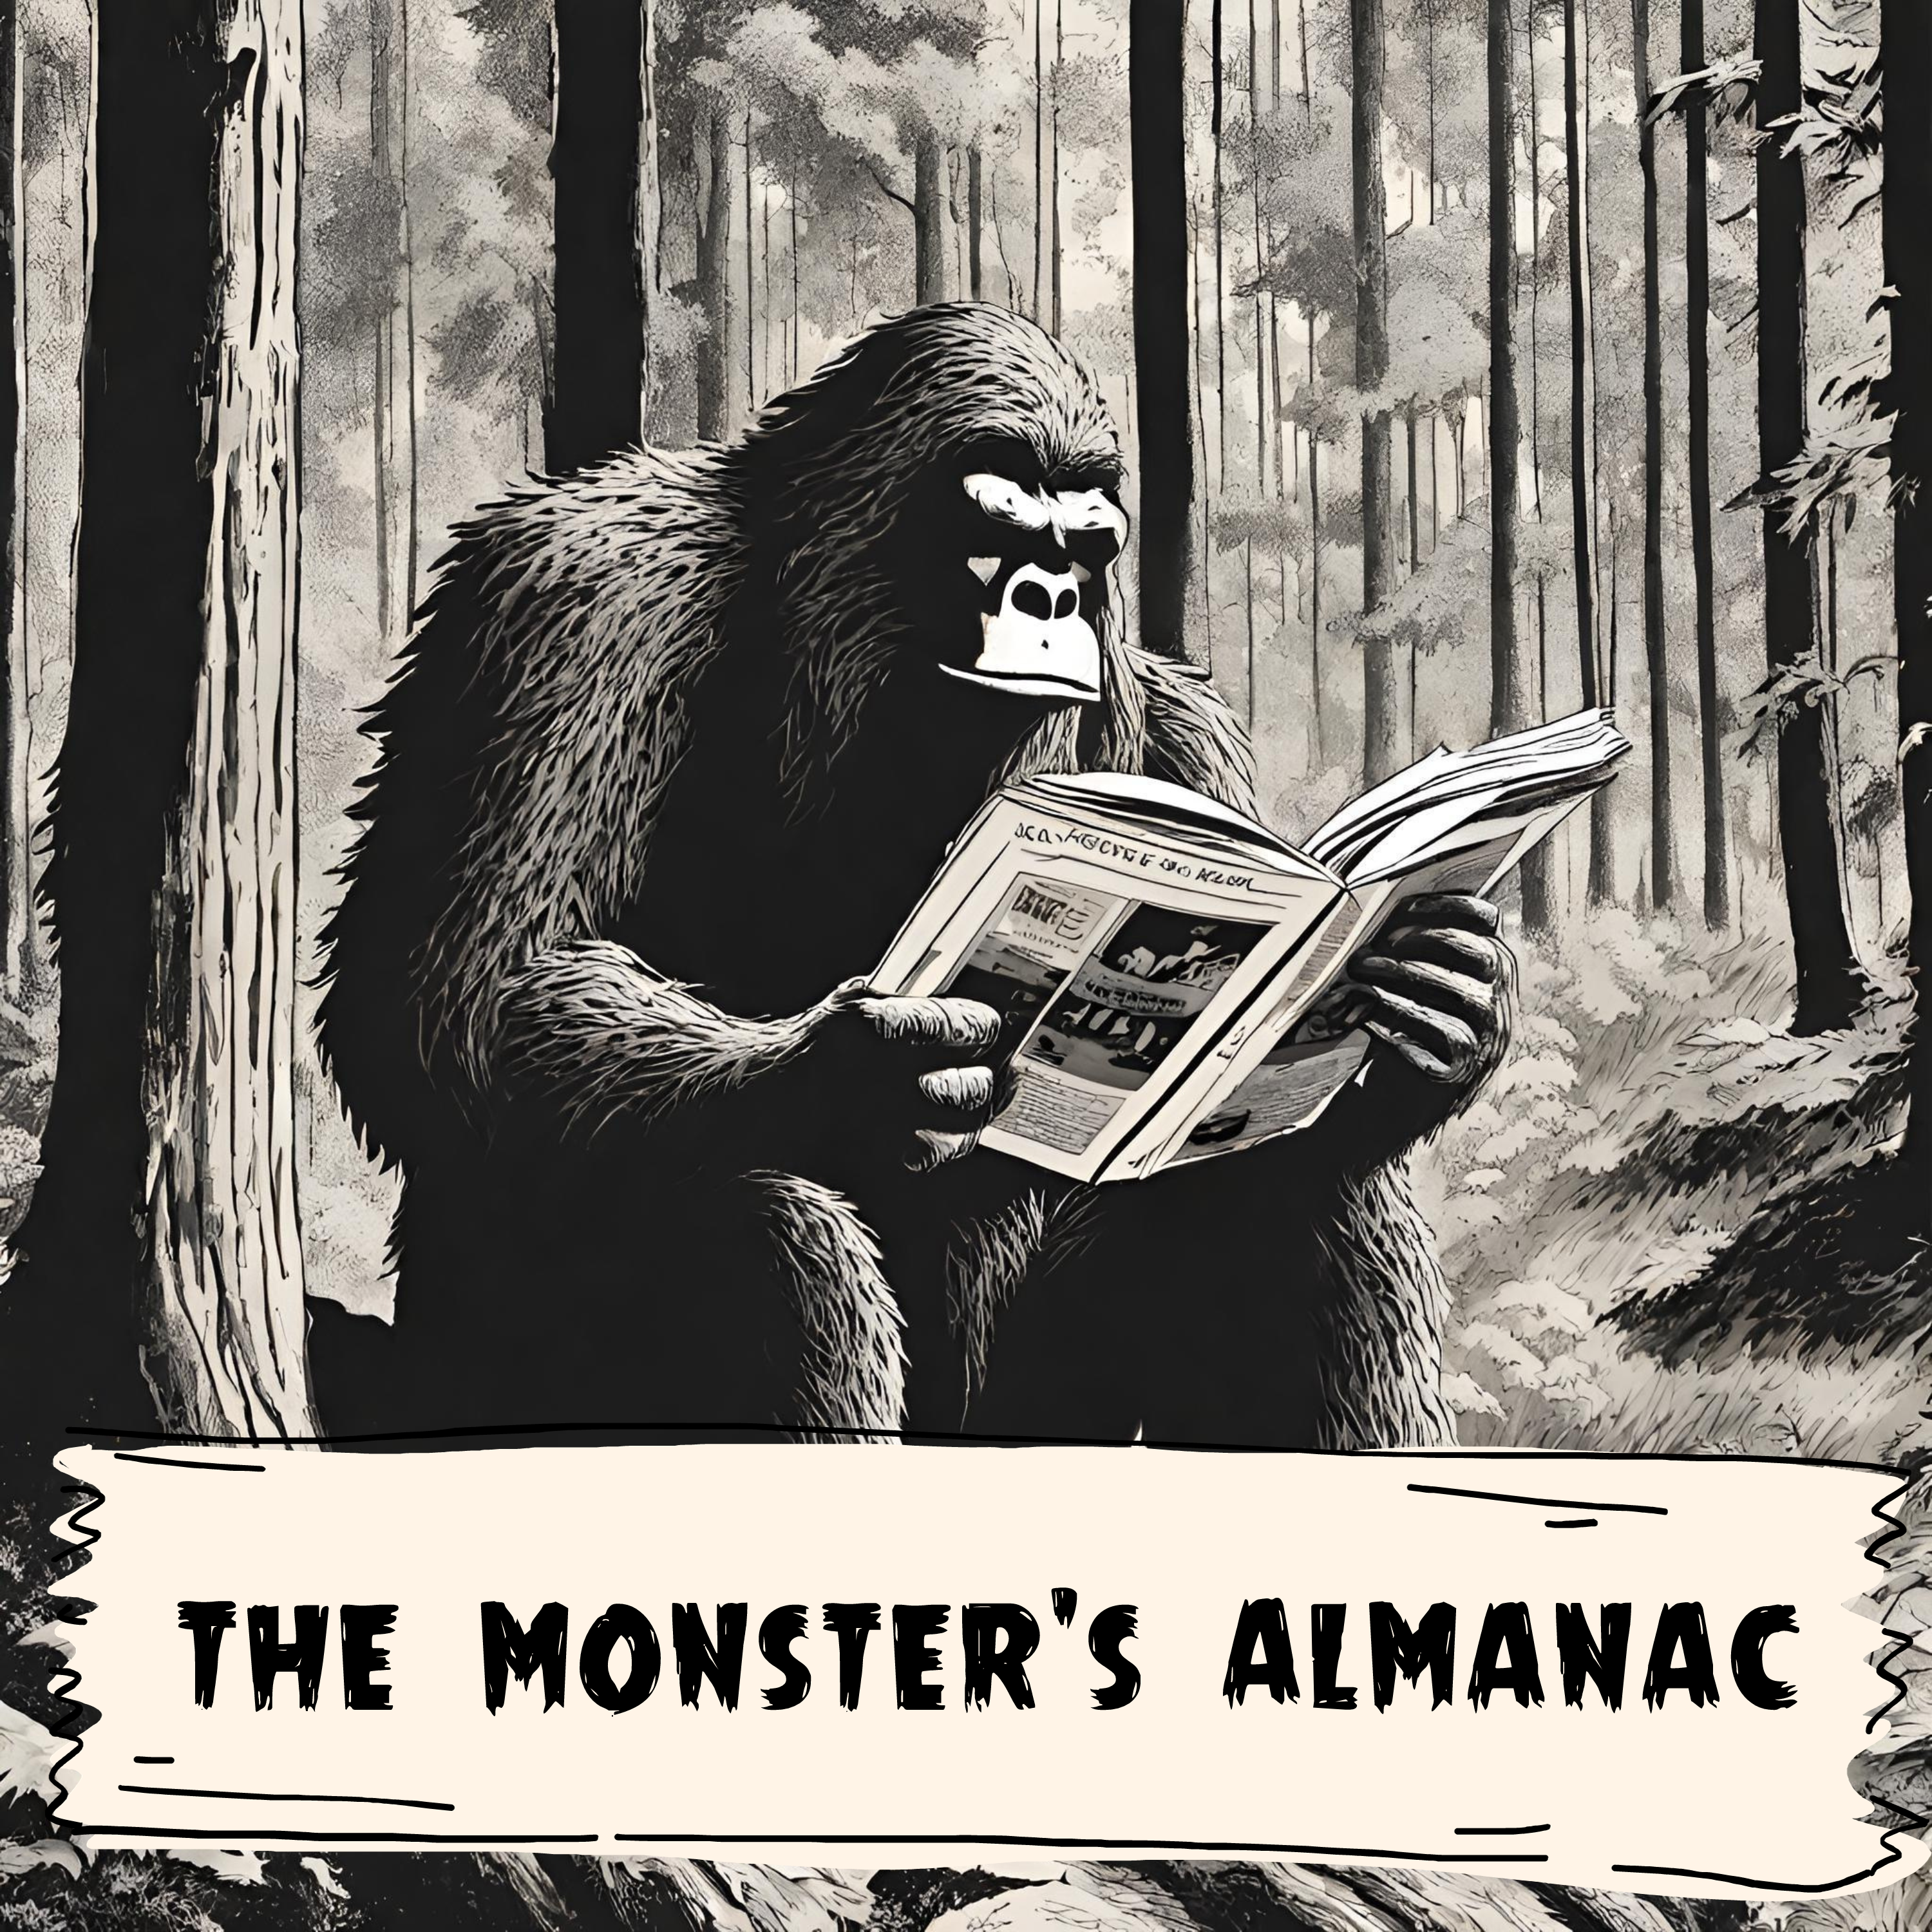 The Monster’s Almanac by Joe Fisher